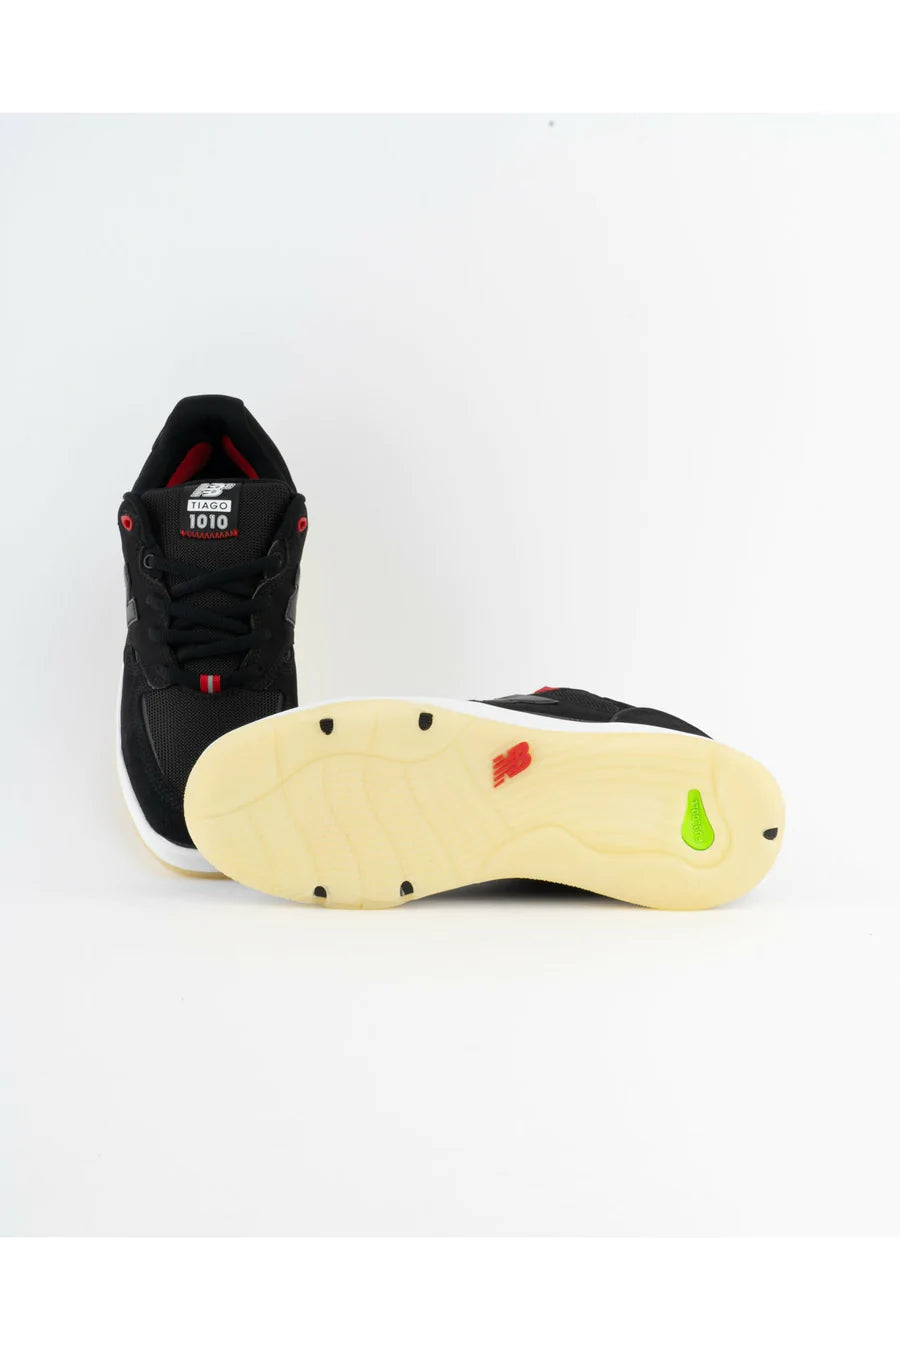 New Balance NM 1010 Skate Shoes - Black